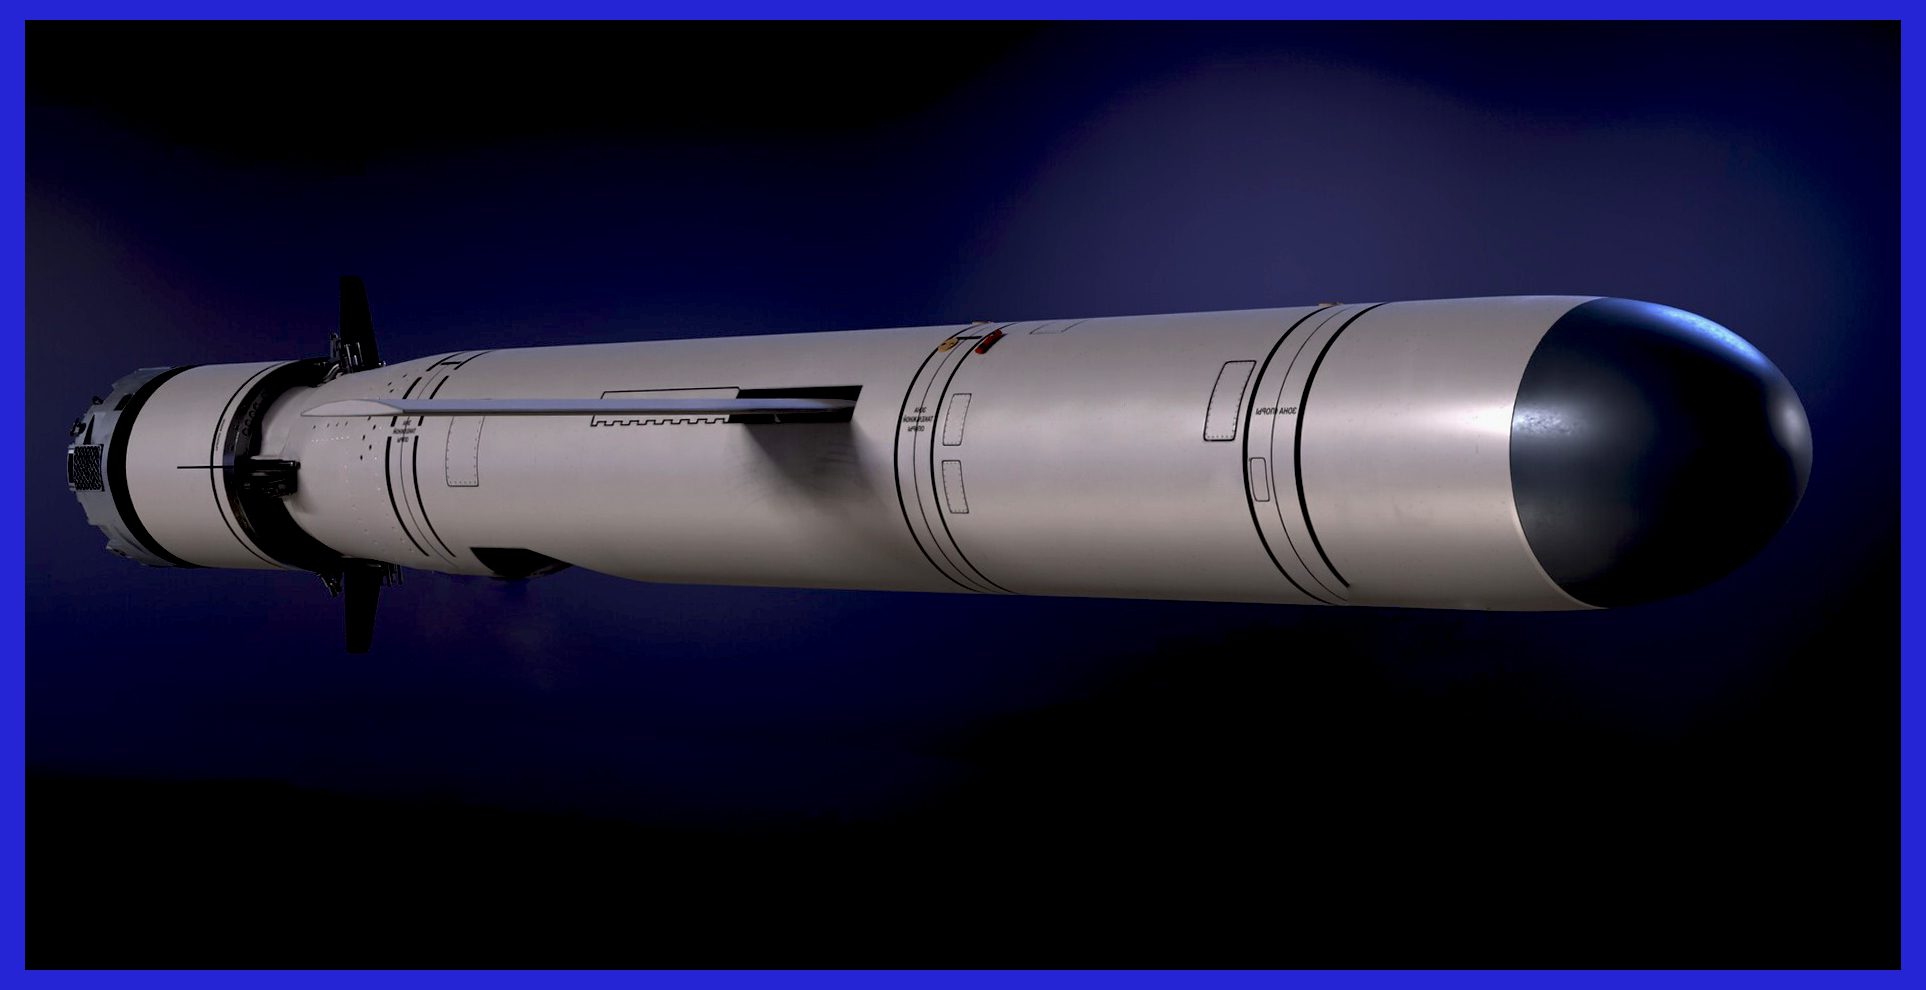 Photo Credit: art station / In-depth Analysis of 3M Series Kalibr Cruise Missiles